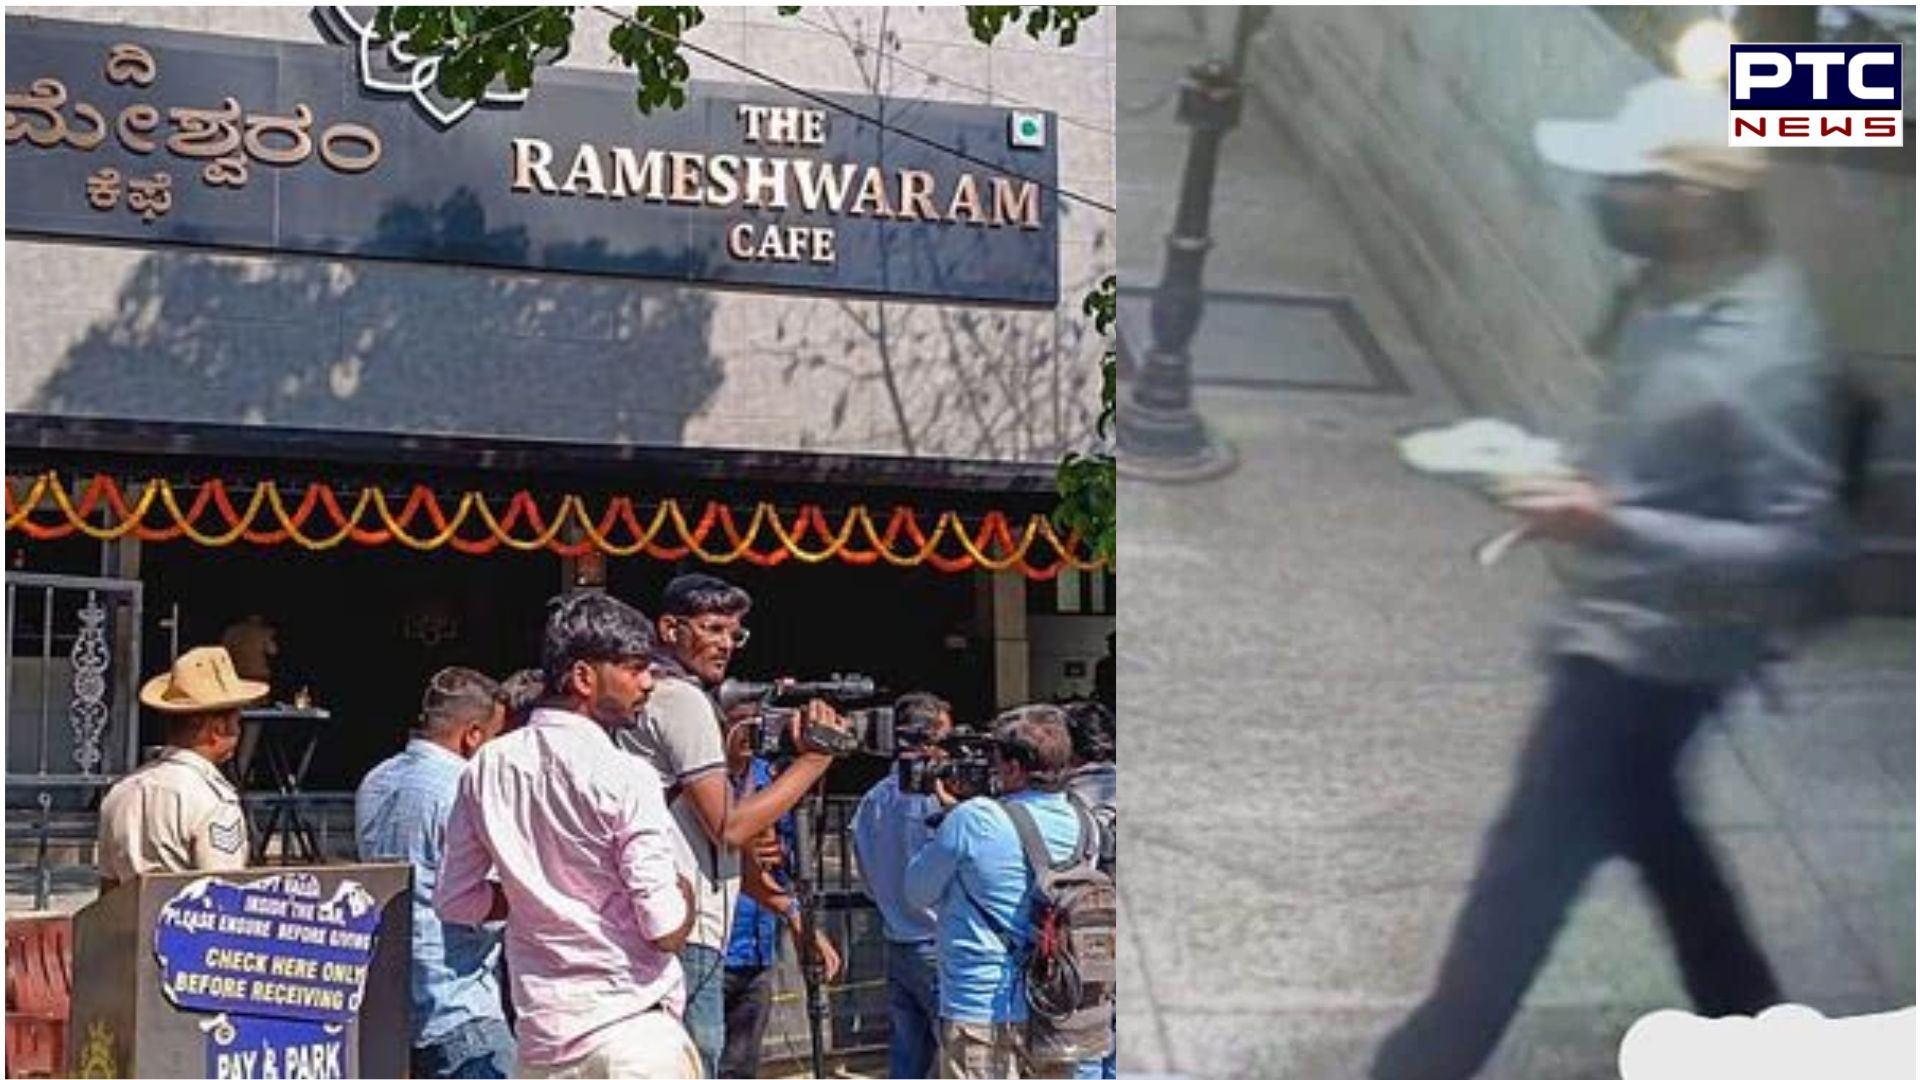 Bengaluru Rameshwaram Cafe blast: Suspect caught on CCTV, seen carrying plate of idlis moments before explosion